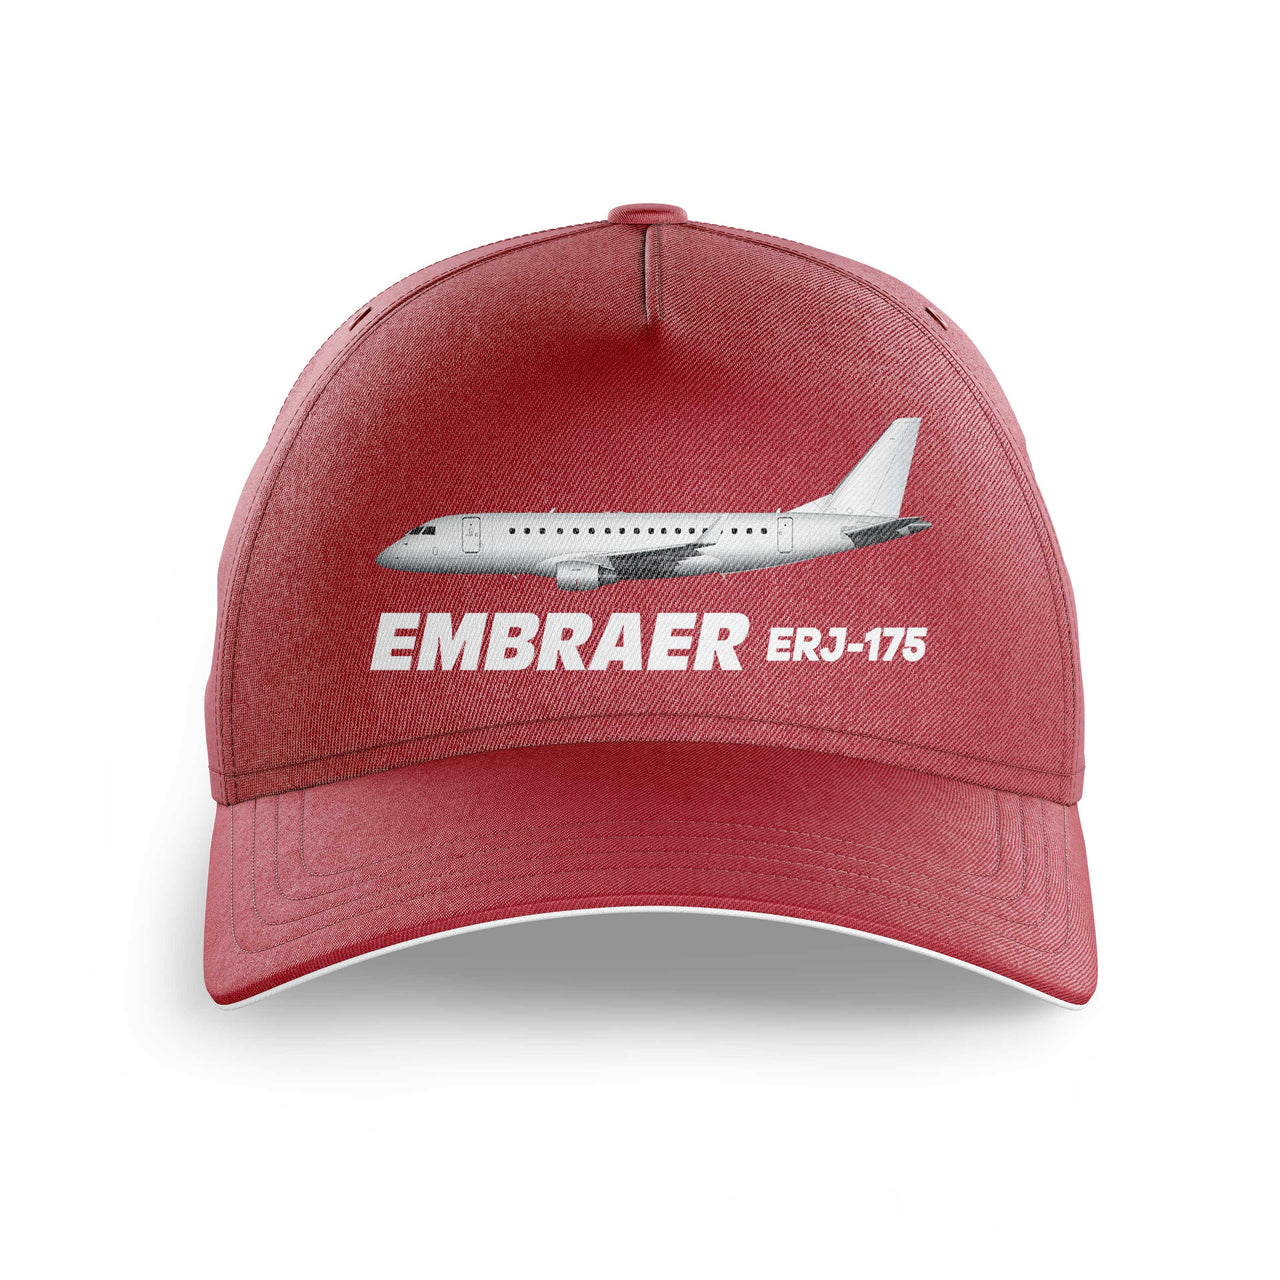 The Embraer ERJ-175 Printed Hats